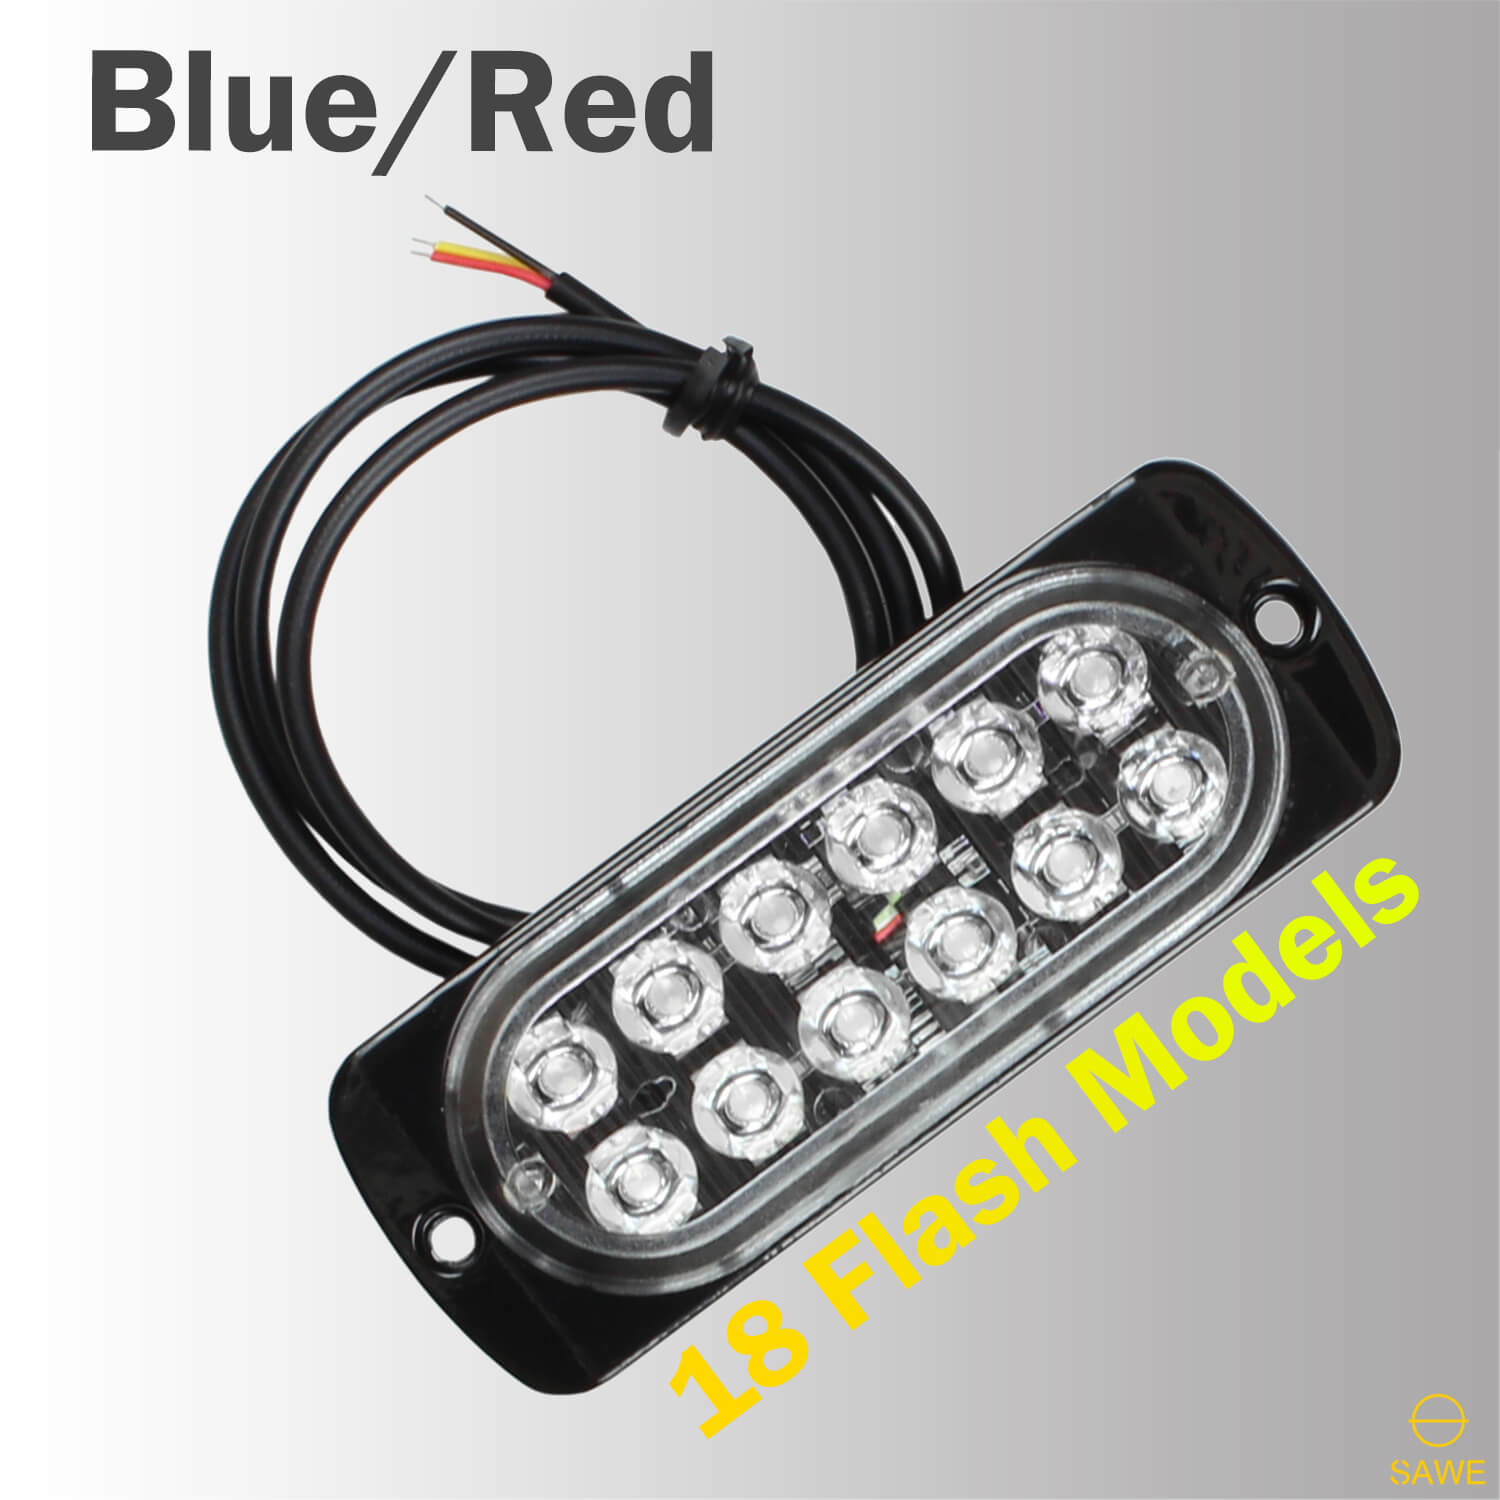 Emergency LED Strobe Lights Bar for Offroad Car Truck Warning Hazard Flash Grille and Surface Mount Light - Red / Blue 12-LED